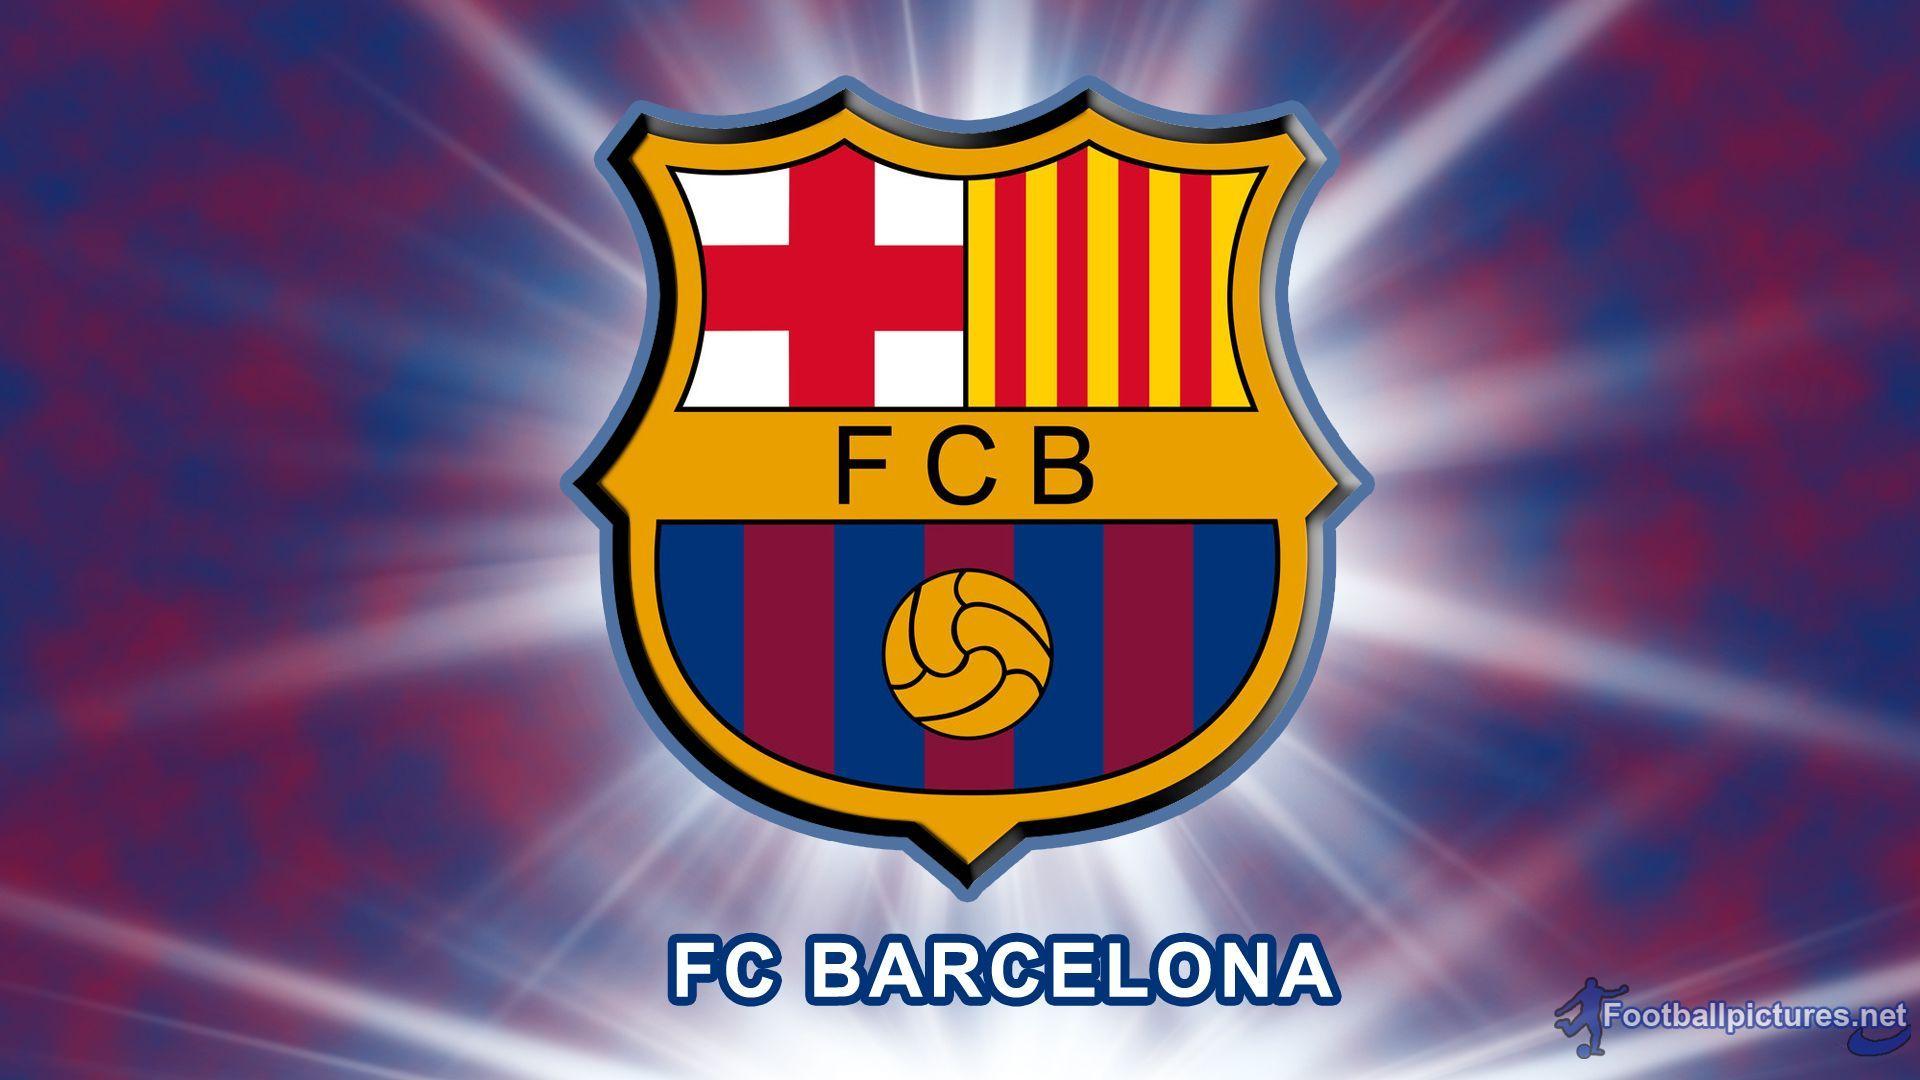 Barca Logo - Barca Logo 2015. Barca Logo Wallpaper. Barca Logo HD. Barca Team